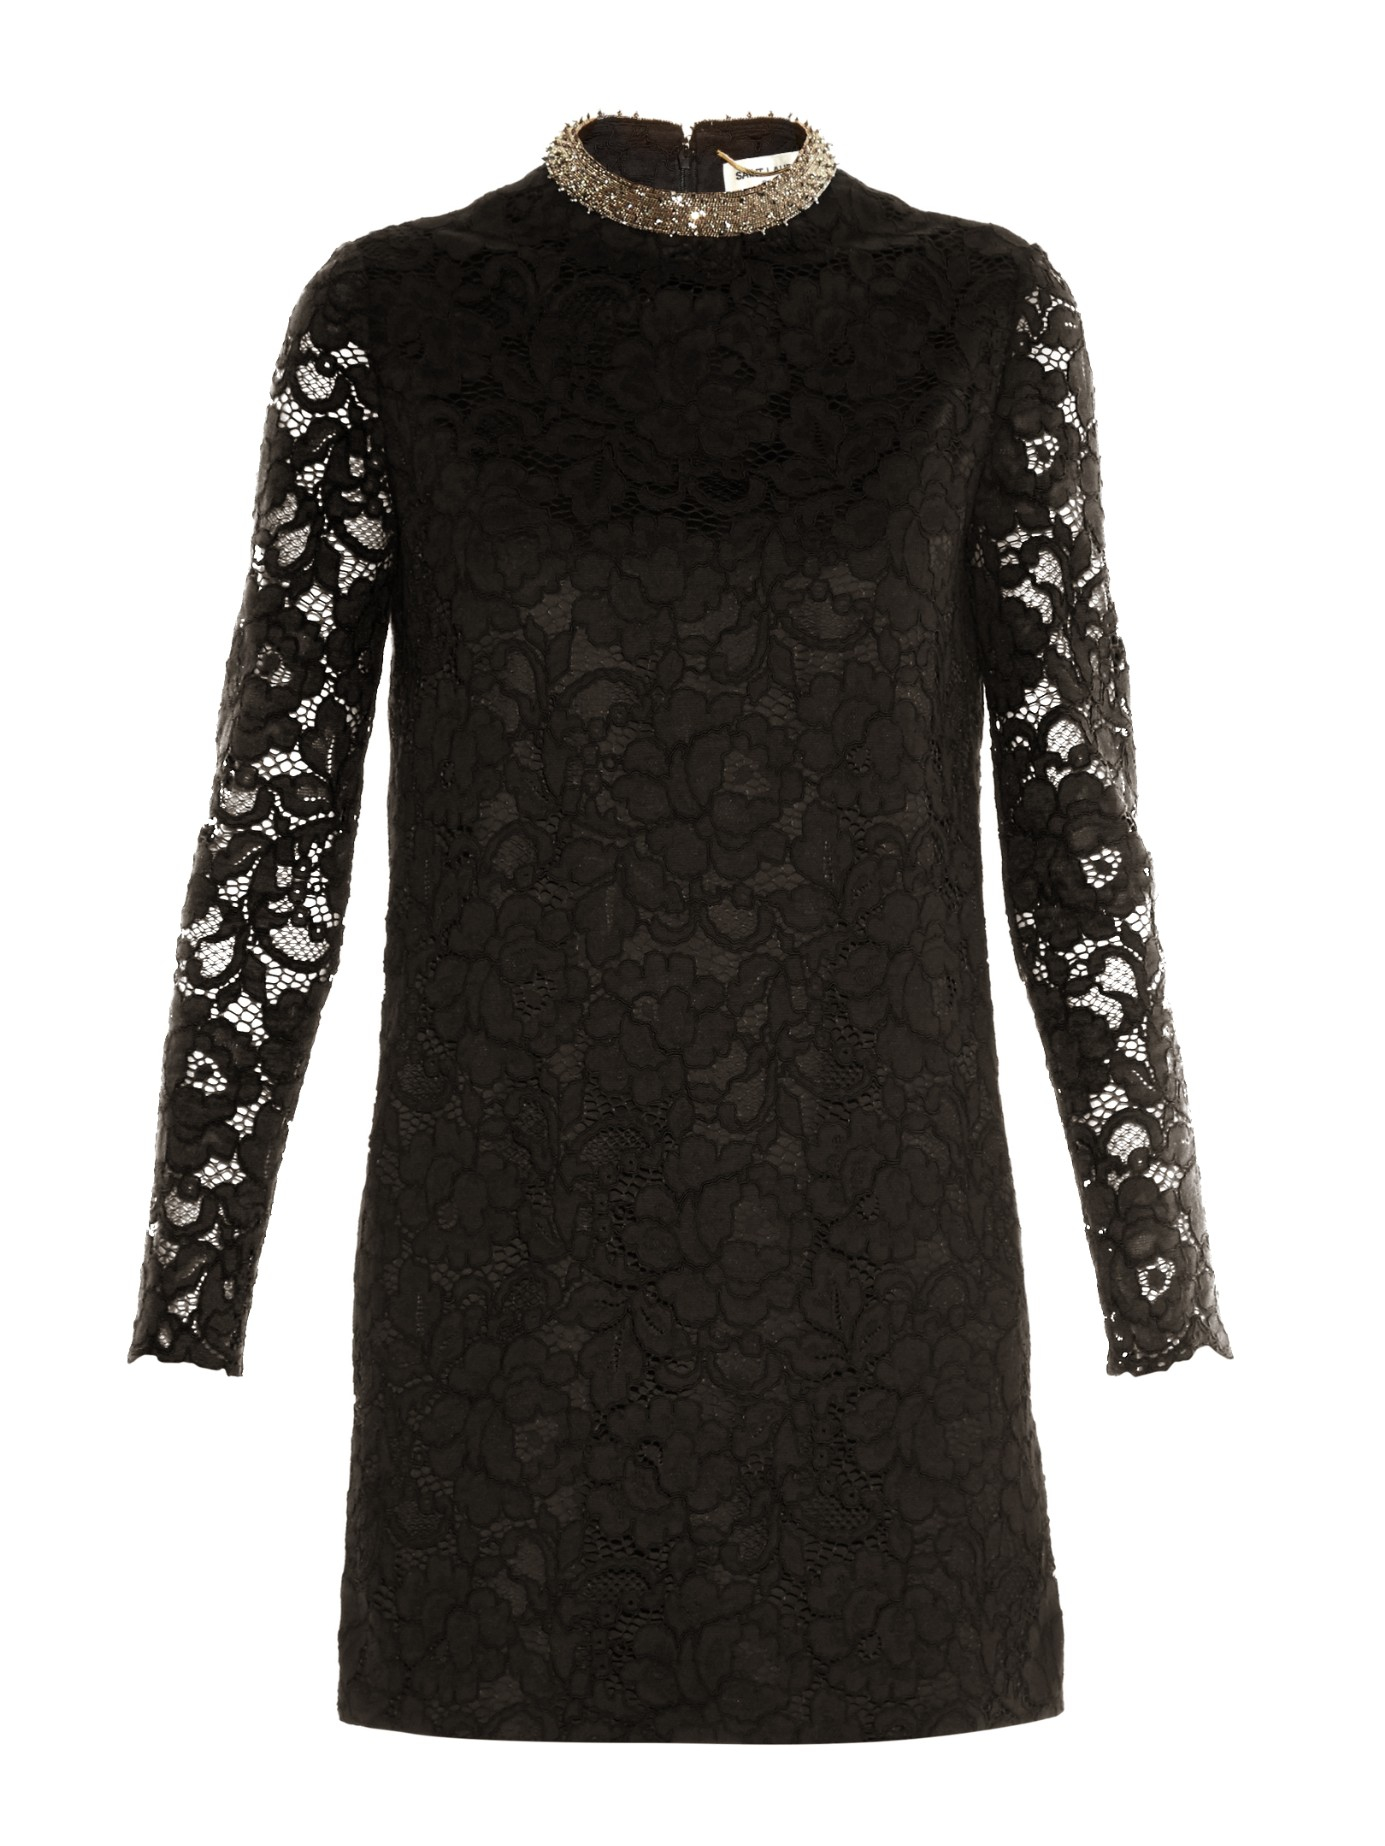 Lyst - Saint Laurent Crystal-Collar Lace Dress in Black